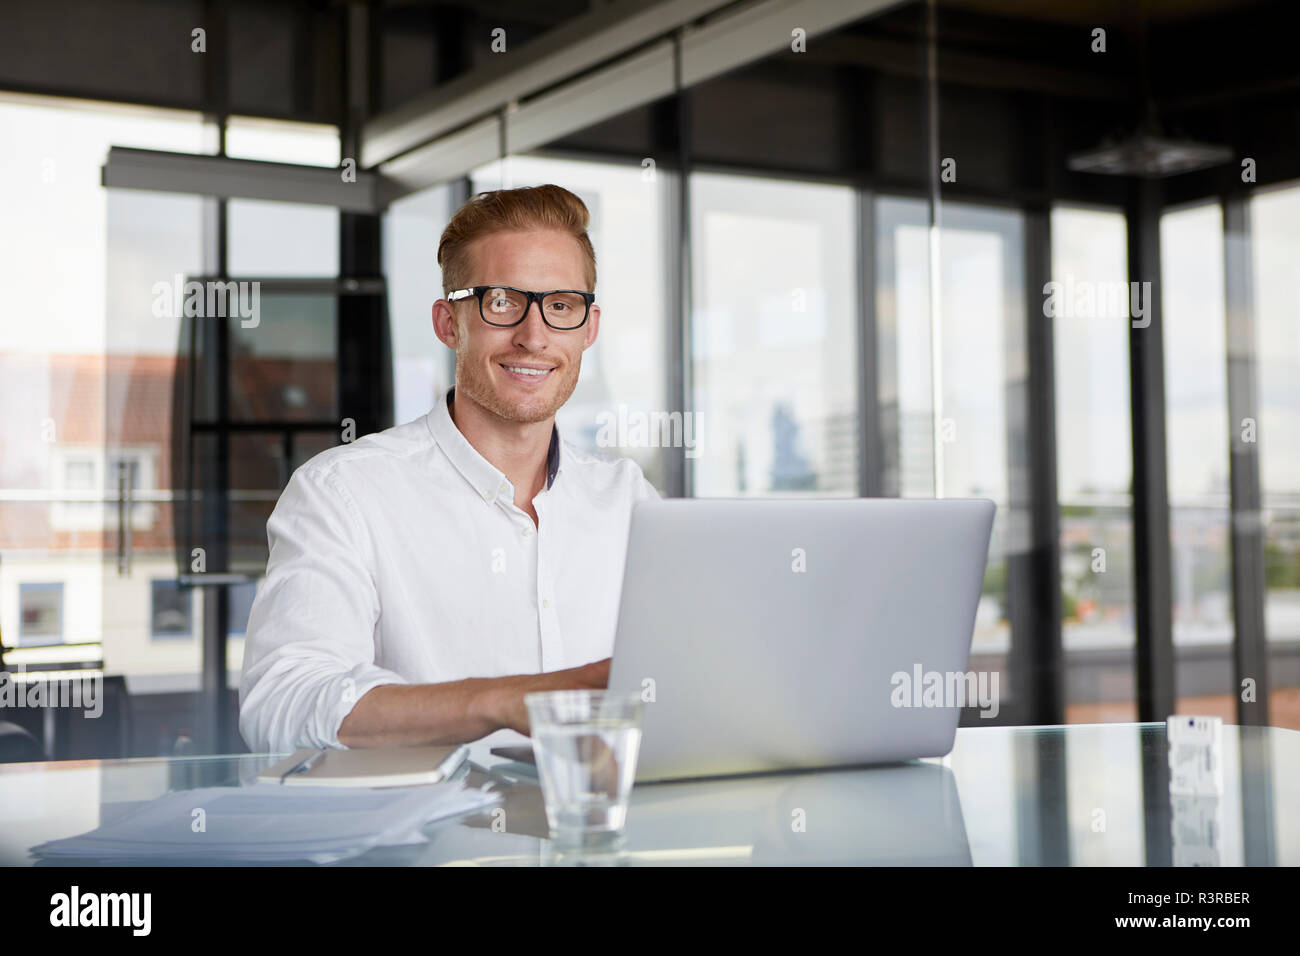 Portrait of smiling businessman using laptop on desk in office Banque D'Images